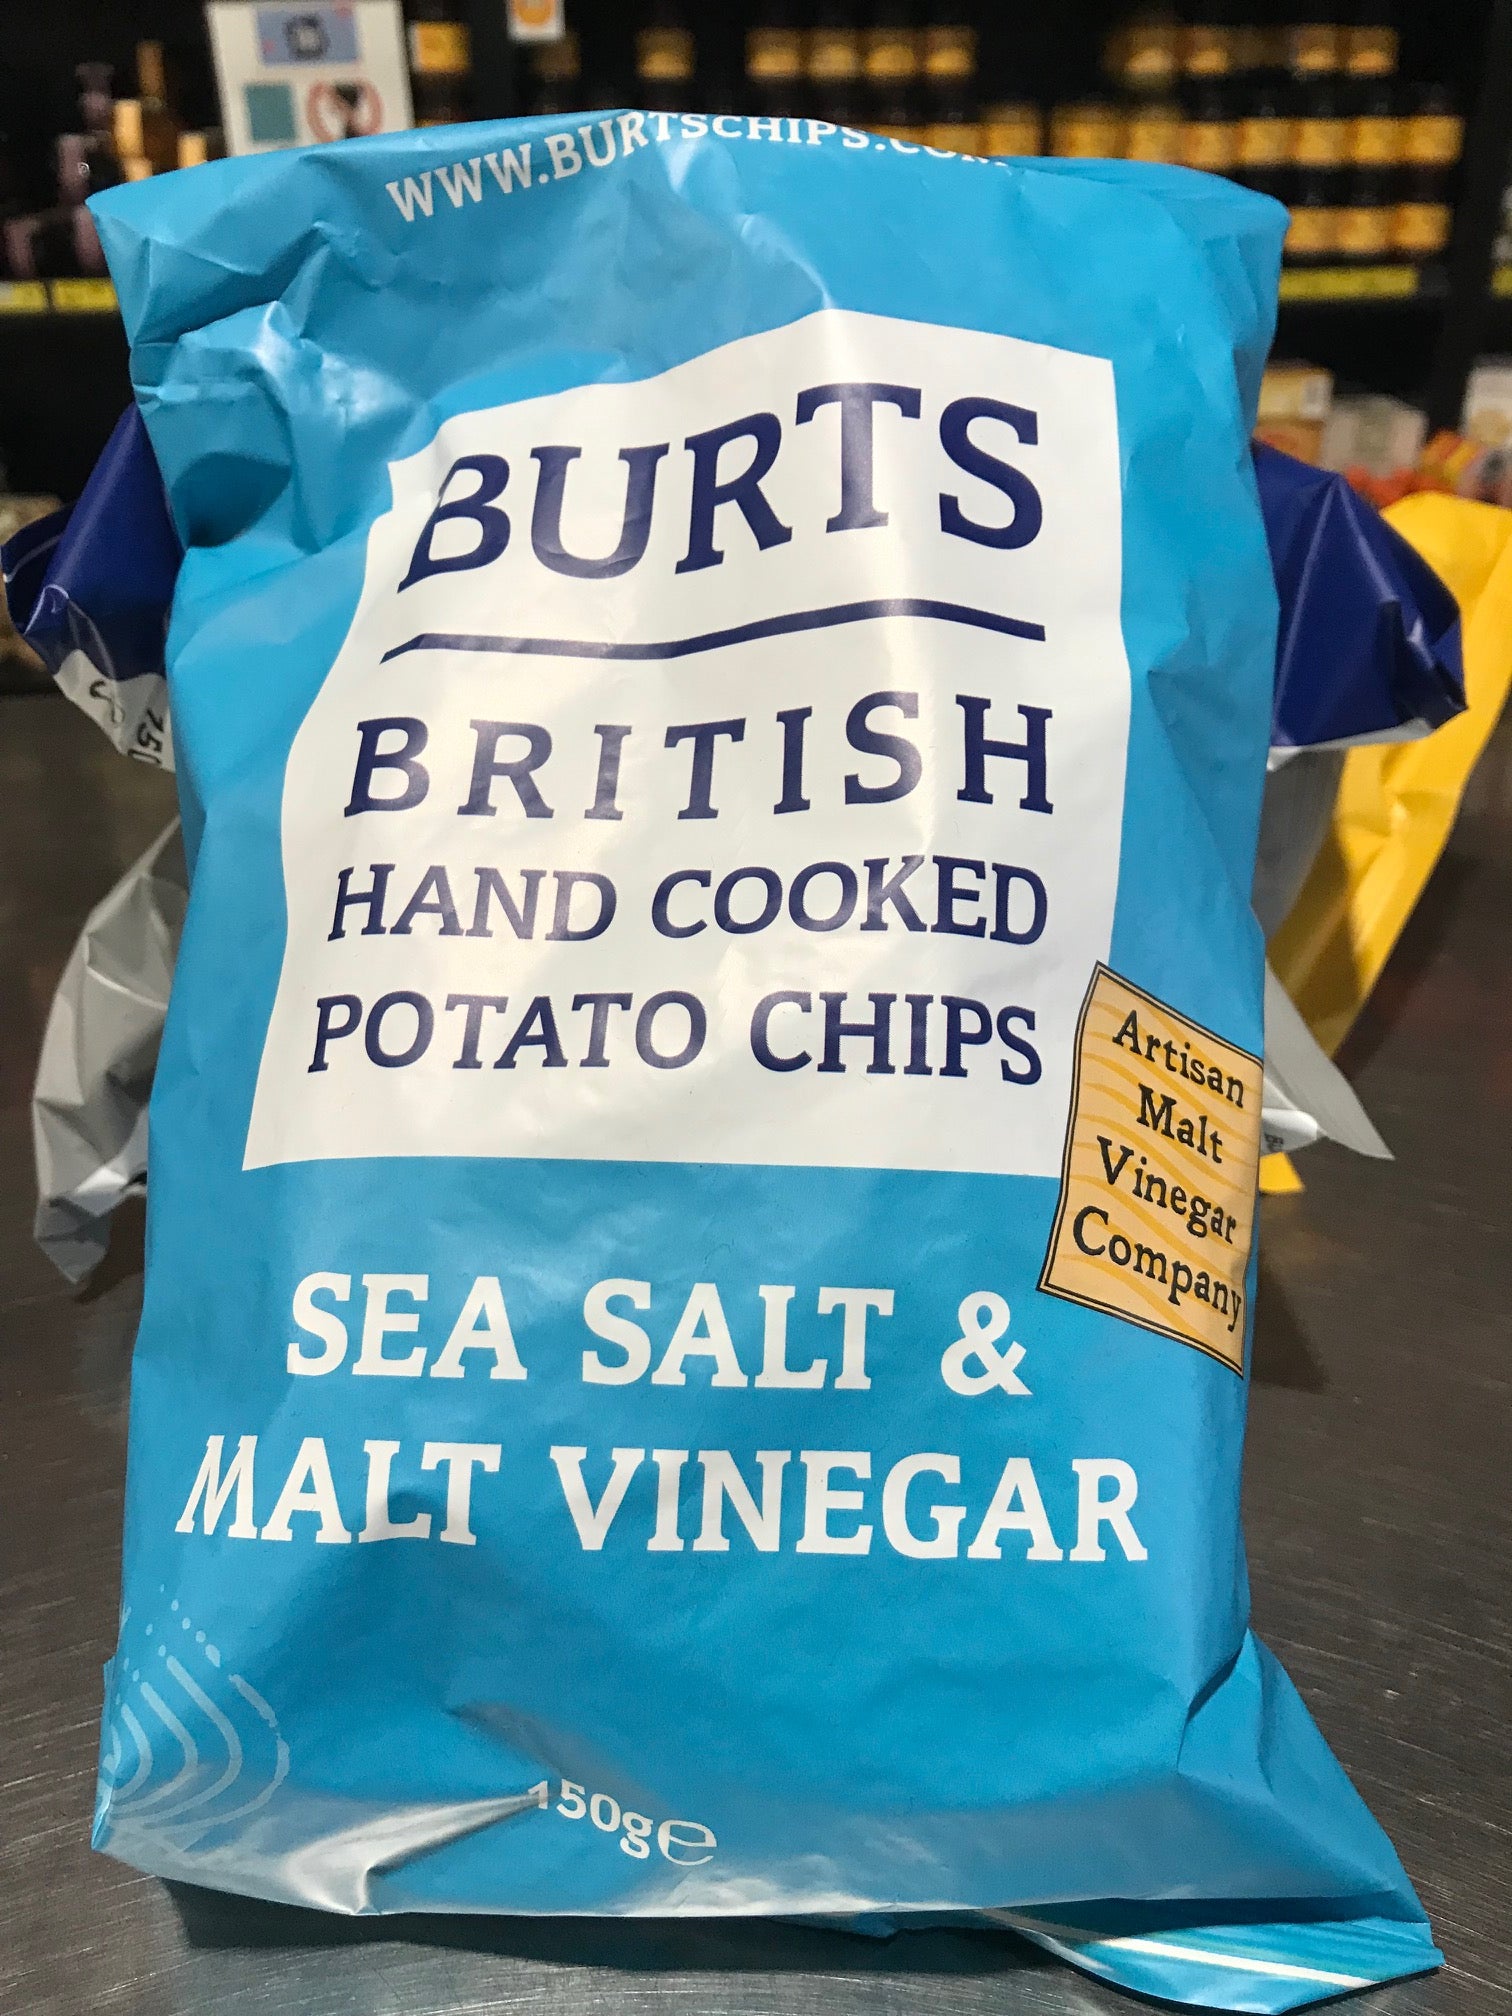 Burts - Sea Salt and Malt Vinegar - British Hand Cooked Potato Chips - $6.99 including GST